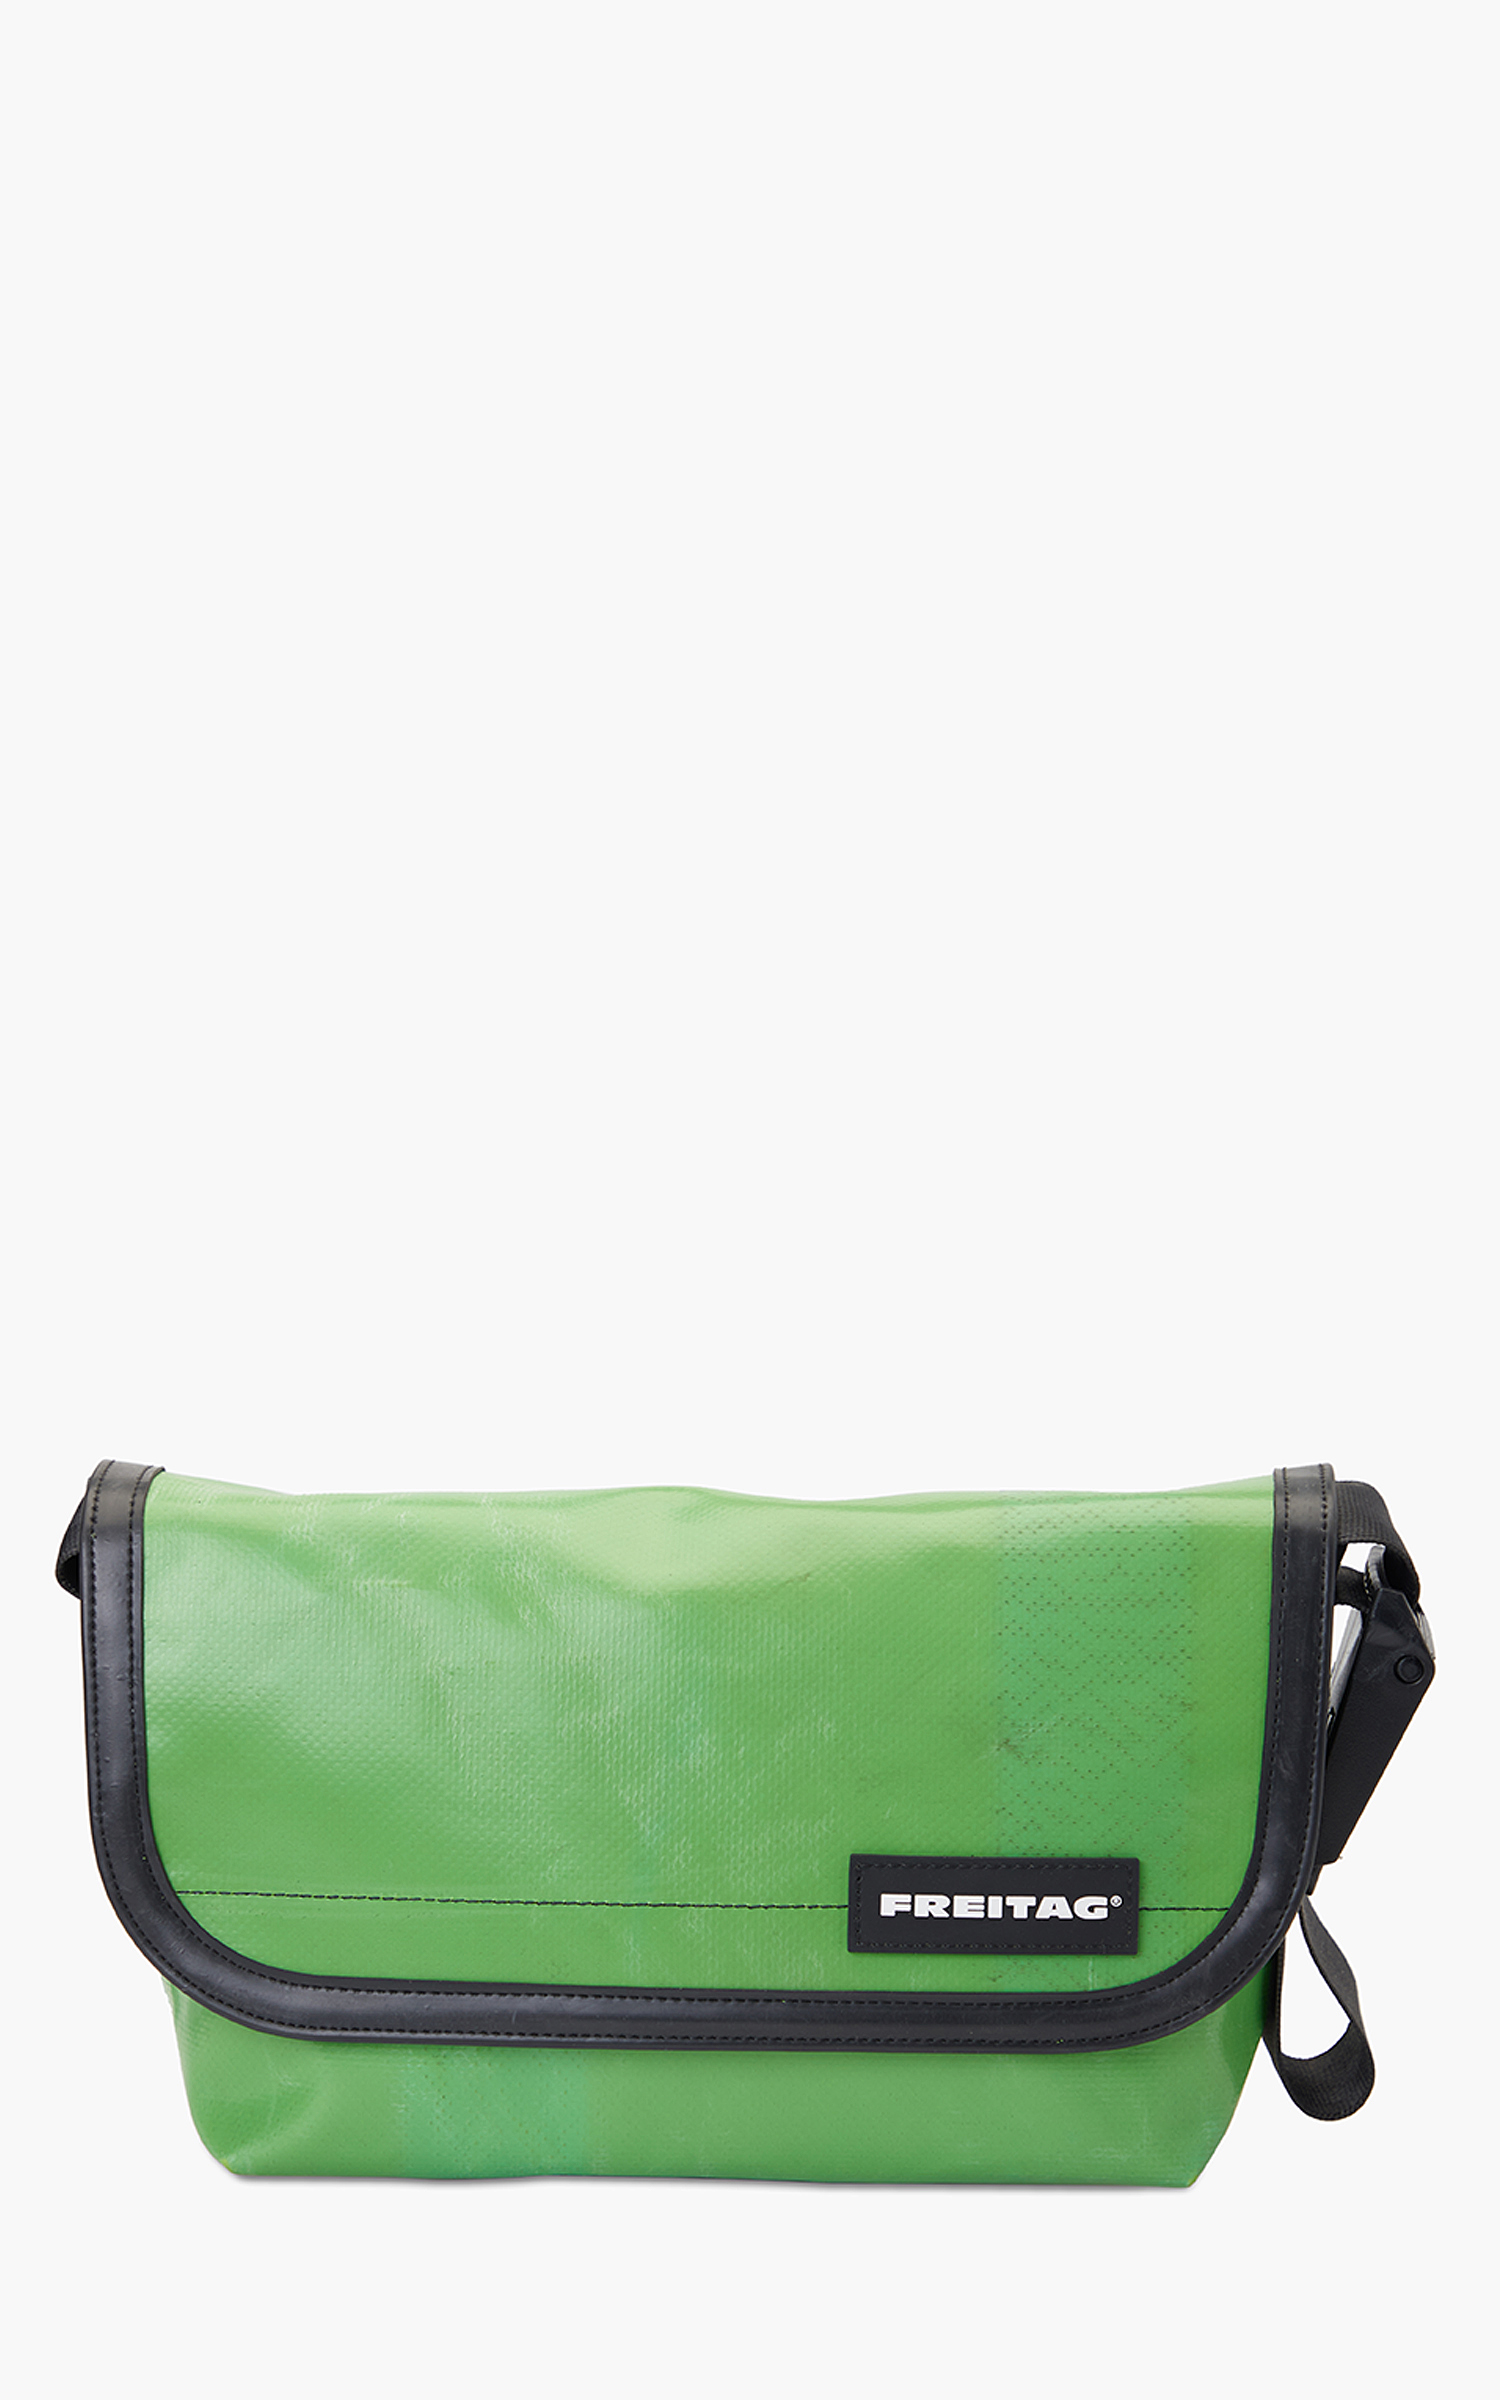 Freitag F41 Hawaii Five-O Messenger Bag XS Green 13-1